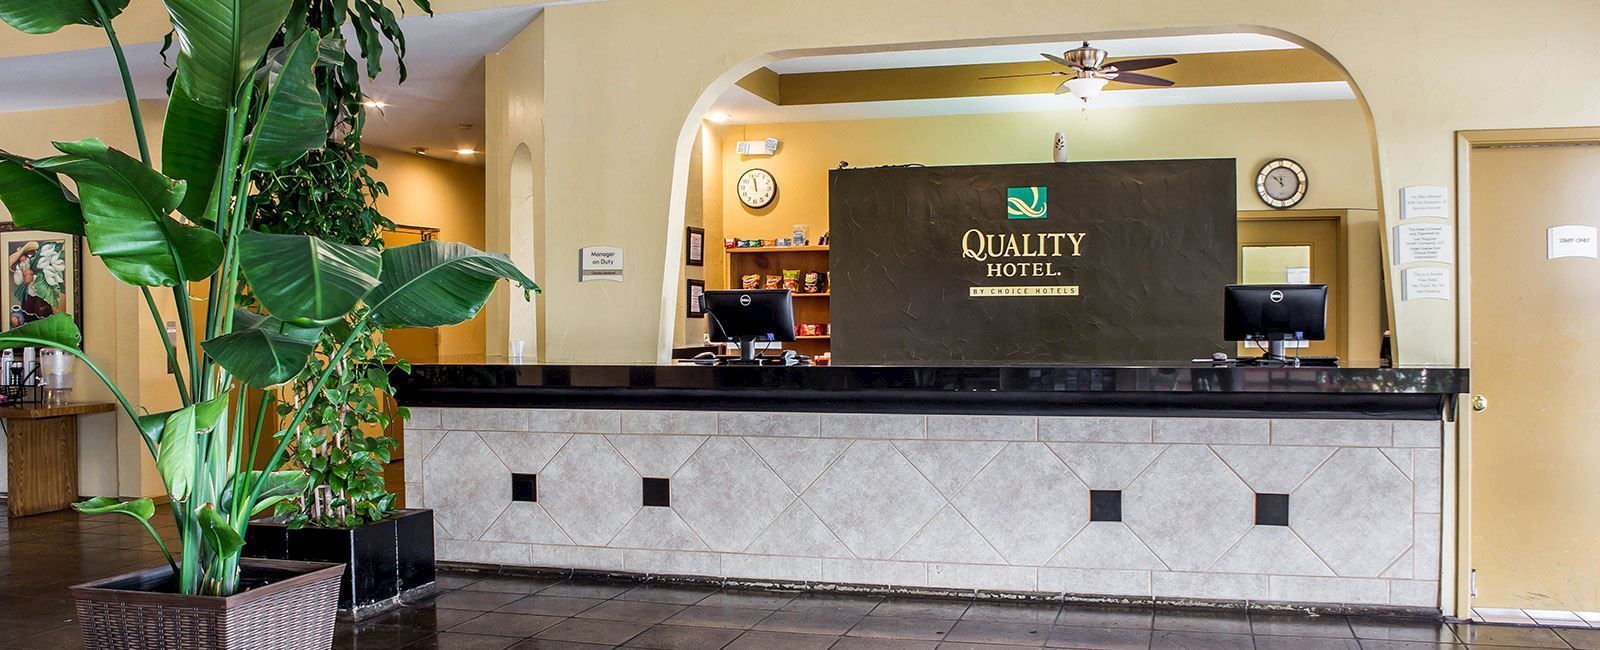 Photo of Quality Hotel Americana, Nogales, AZ